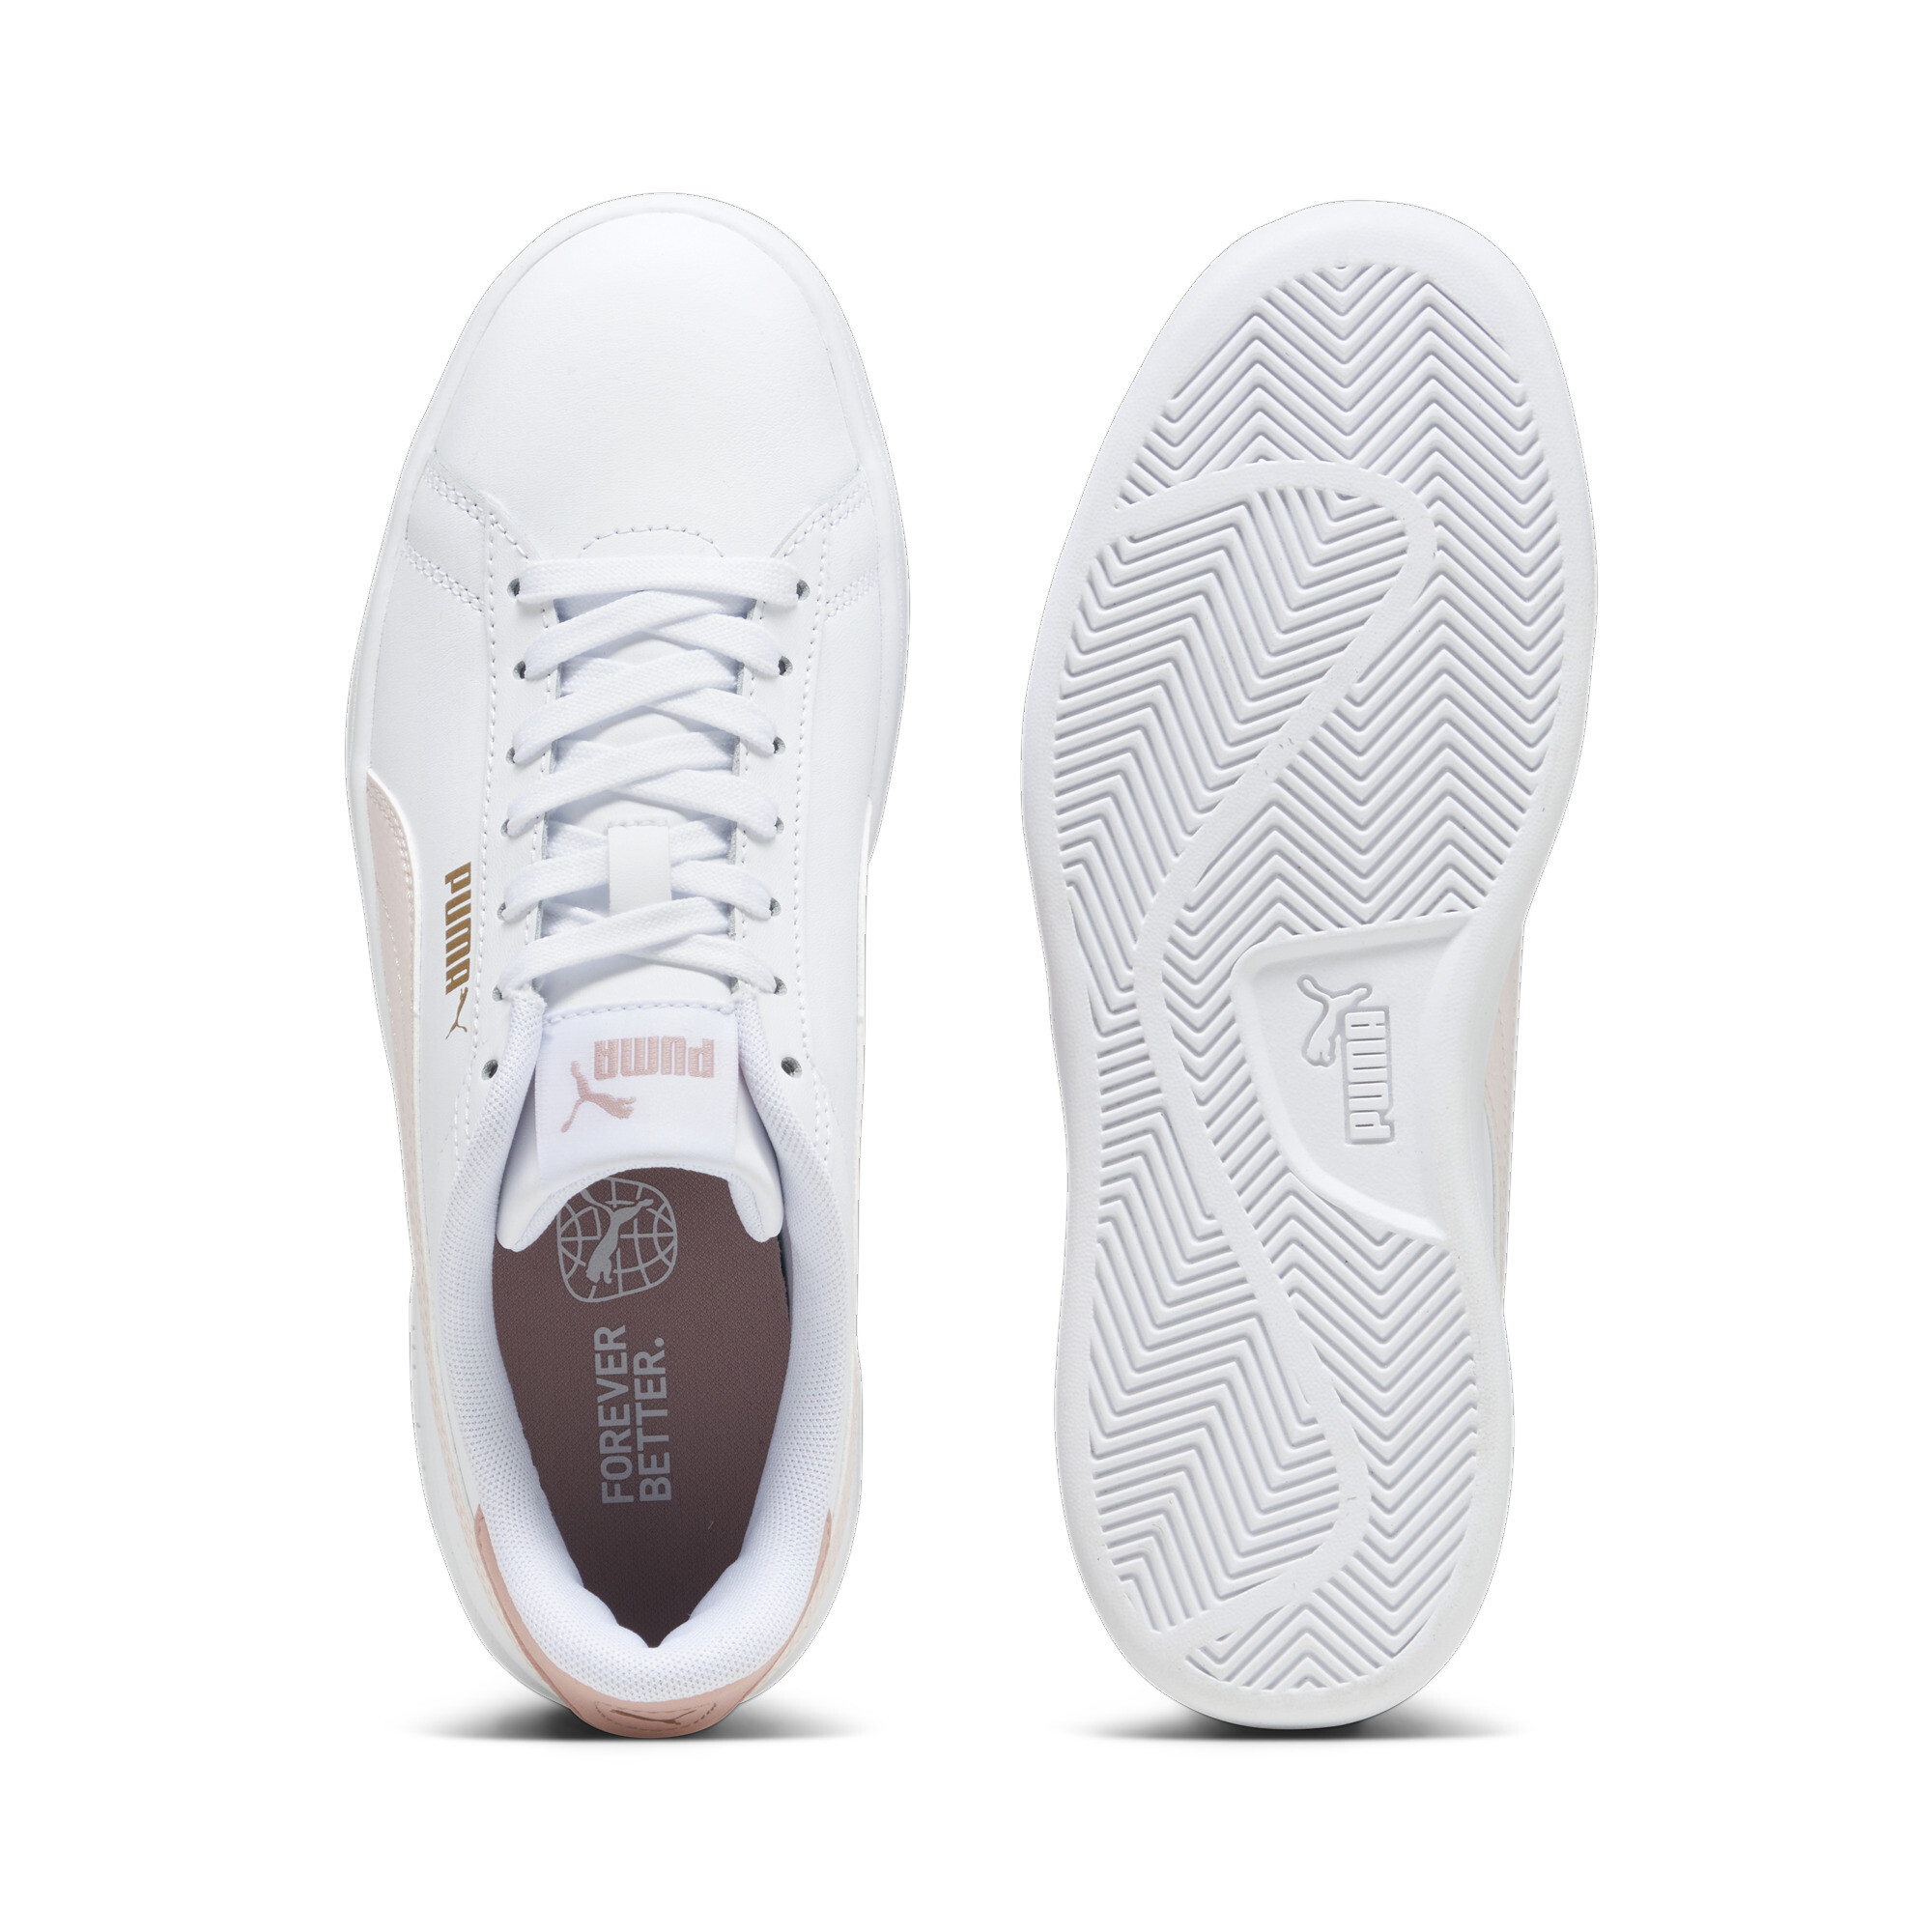 Puma Smash 3.0 L Sneakers, White, Size 43, Shoes